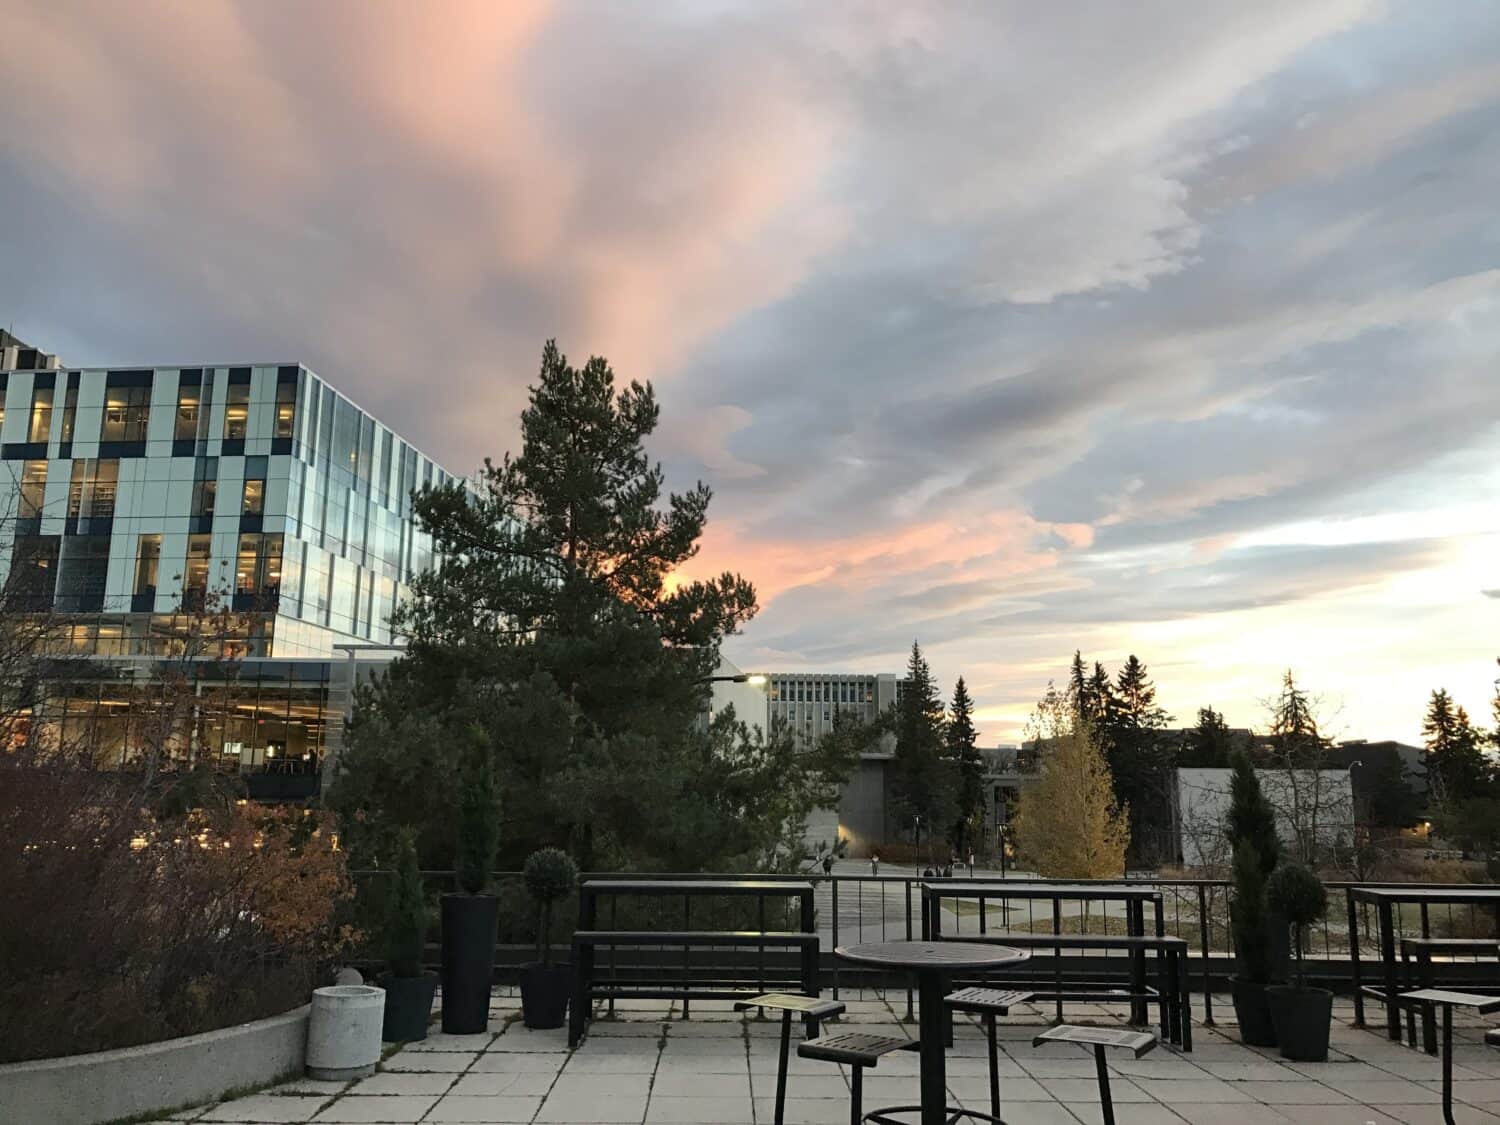 University of Calgary , Calgary has amazing cloudy sky and sunset